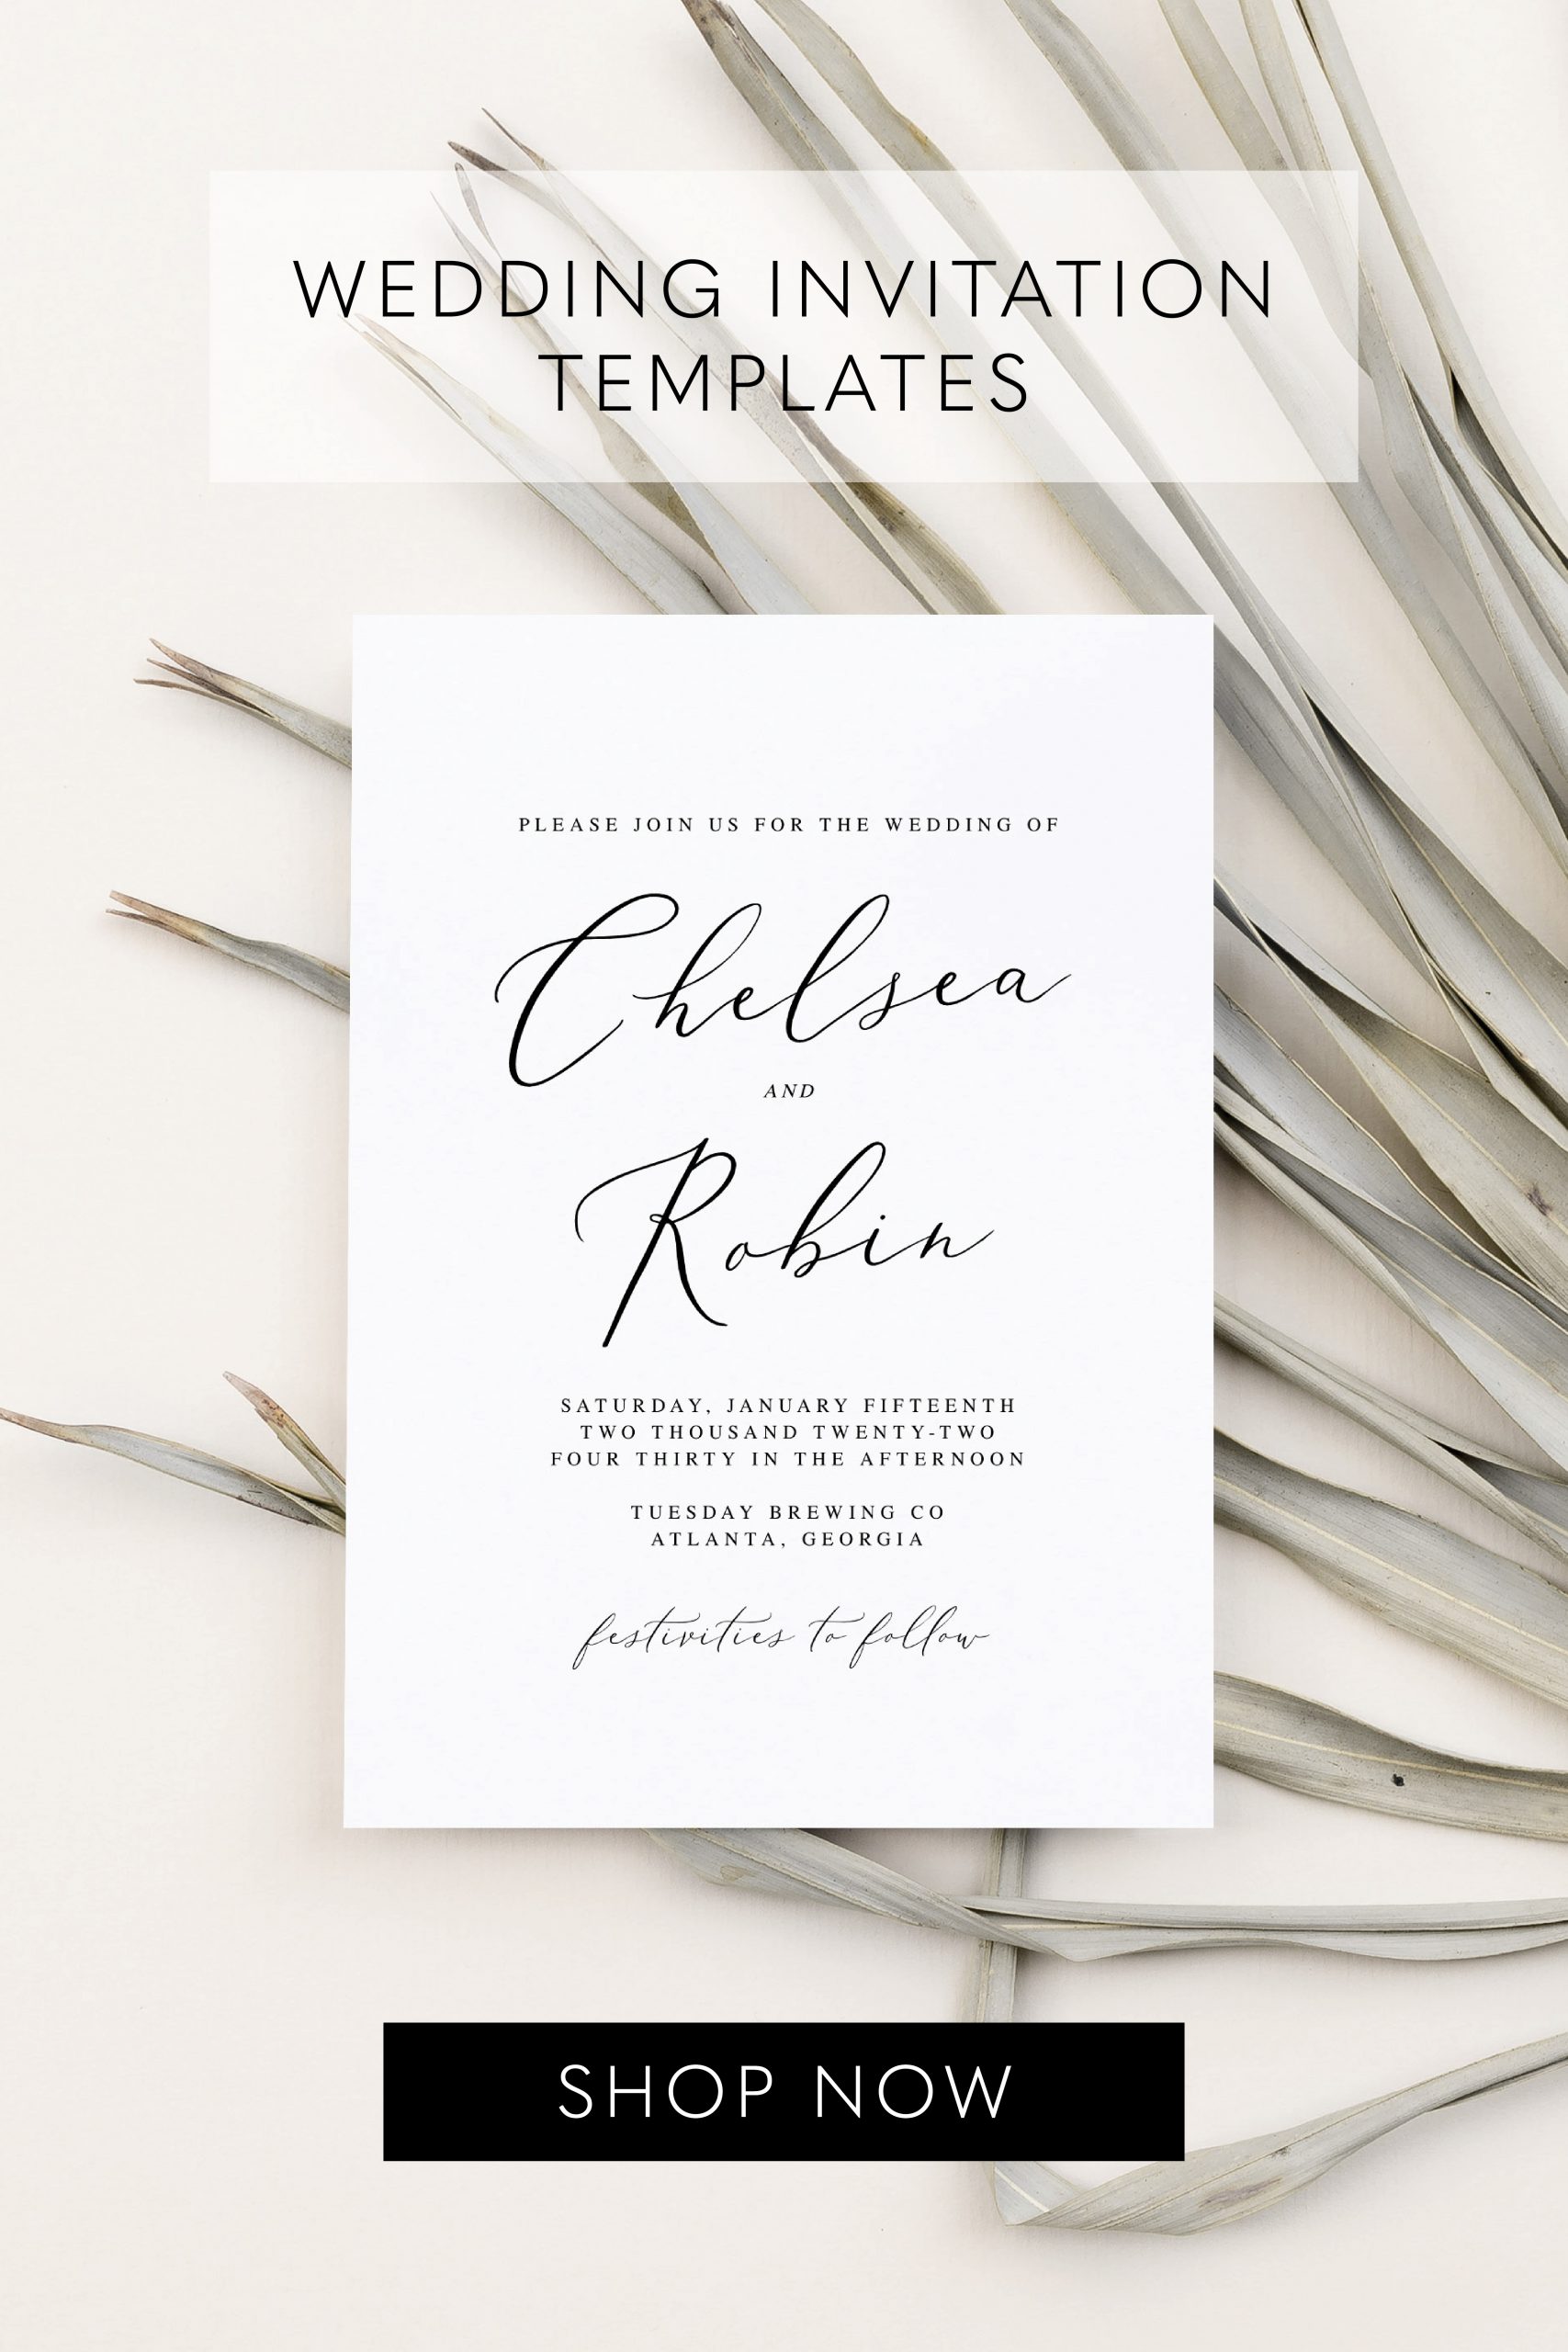 DIY Tutorial: Vellum Wedding Invitations - someday paper co